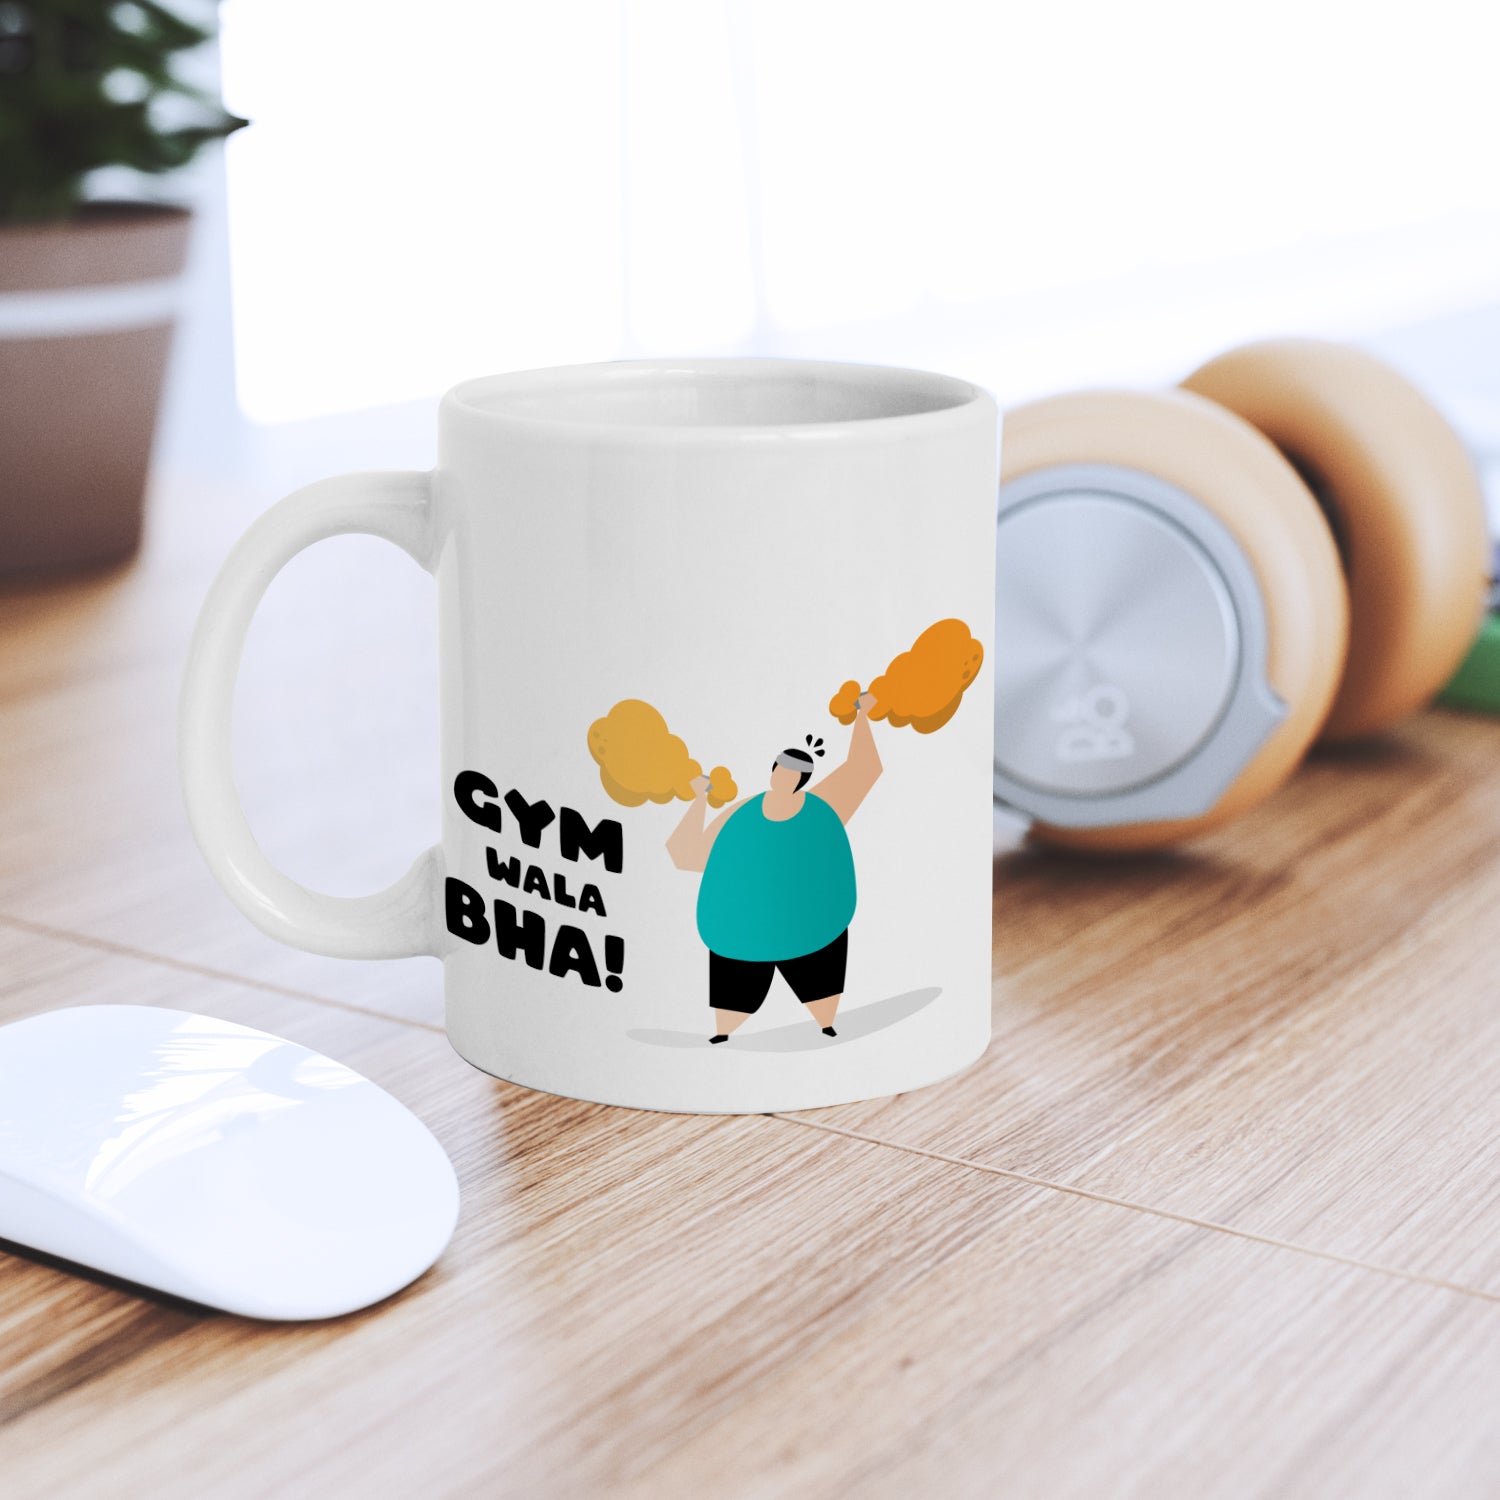 "Gym Wala Bhai" Brother Ceramic Coffee/Tea Mug